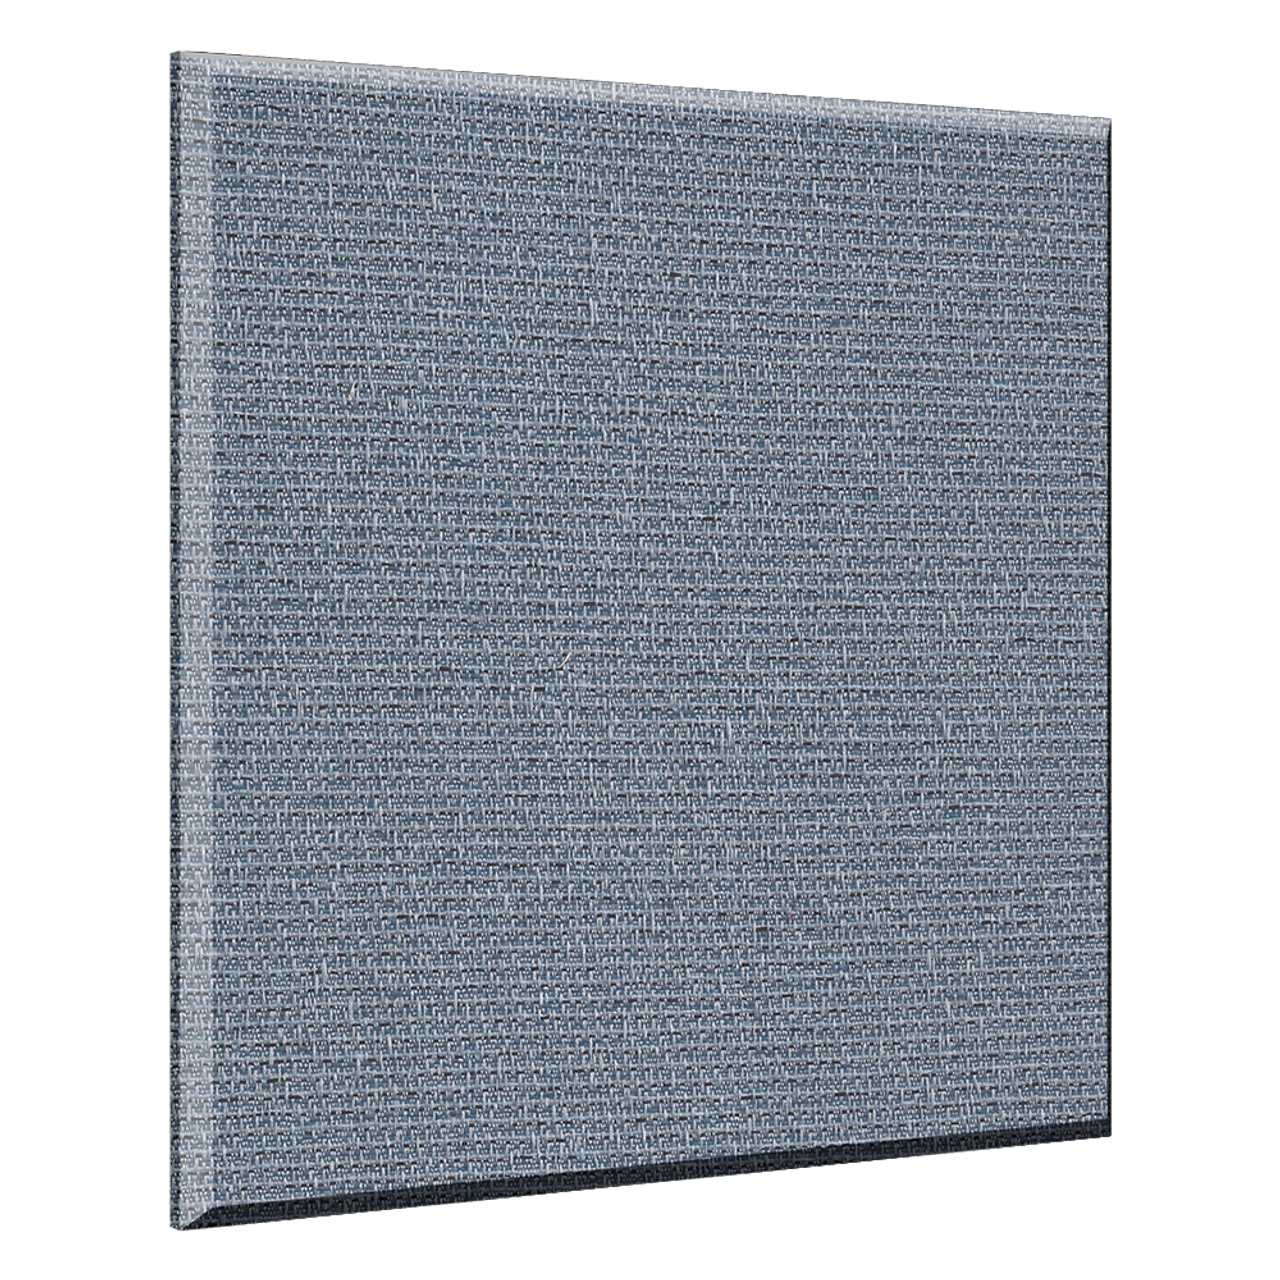 Auralex ProPanel B244 Ceiling - Beveled Edge 2" x 48" x 48" Panel